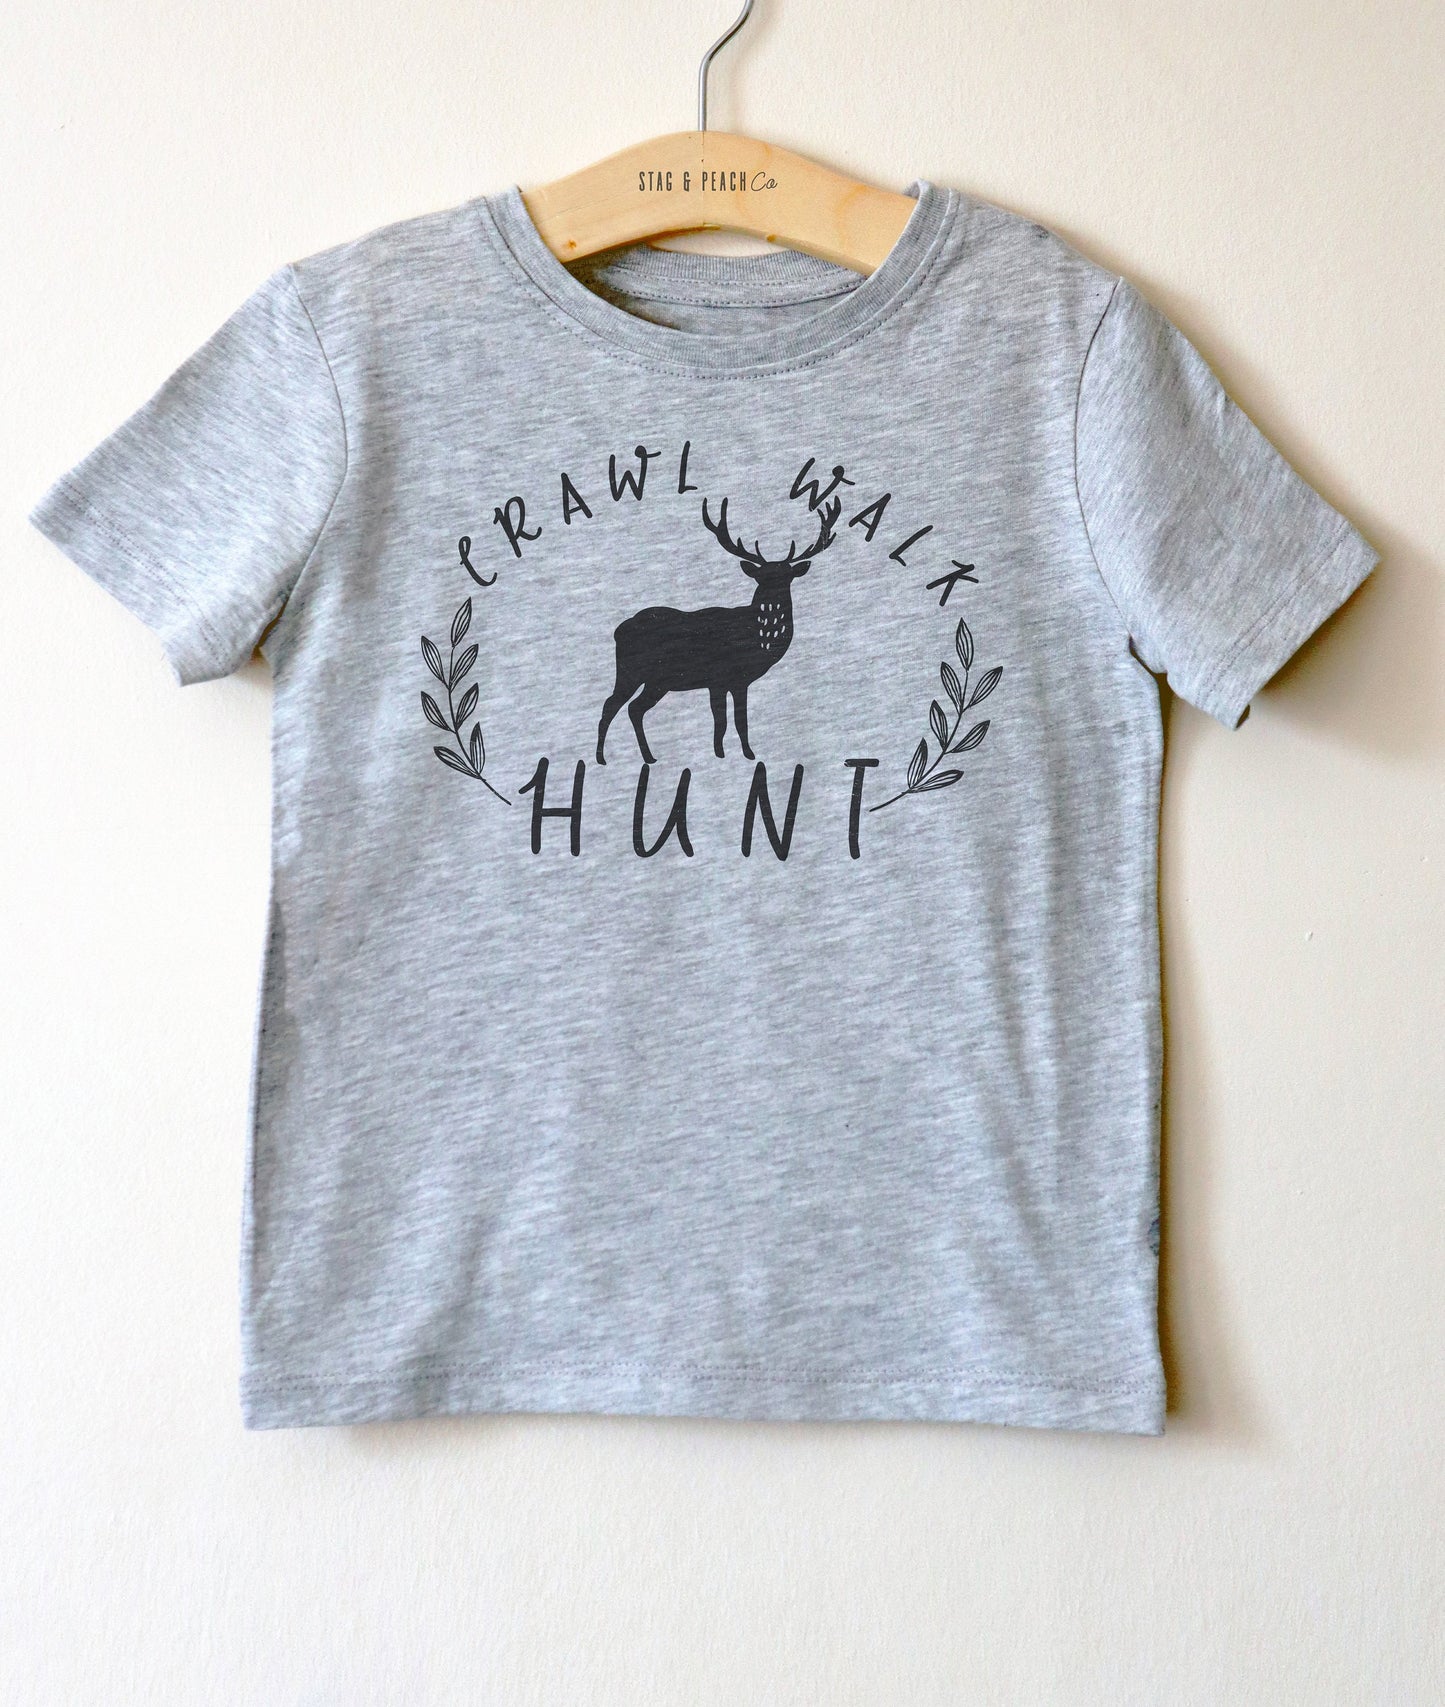 Crawl Walk Hunt Kids Shirt - Hunting Gifts, Deer Print Shirt, Deer Hunting Shirt, Hunting Kids Clothes, Hunting Toddler Gift, Deer Shirt